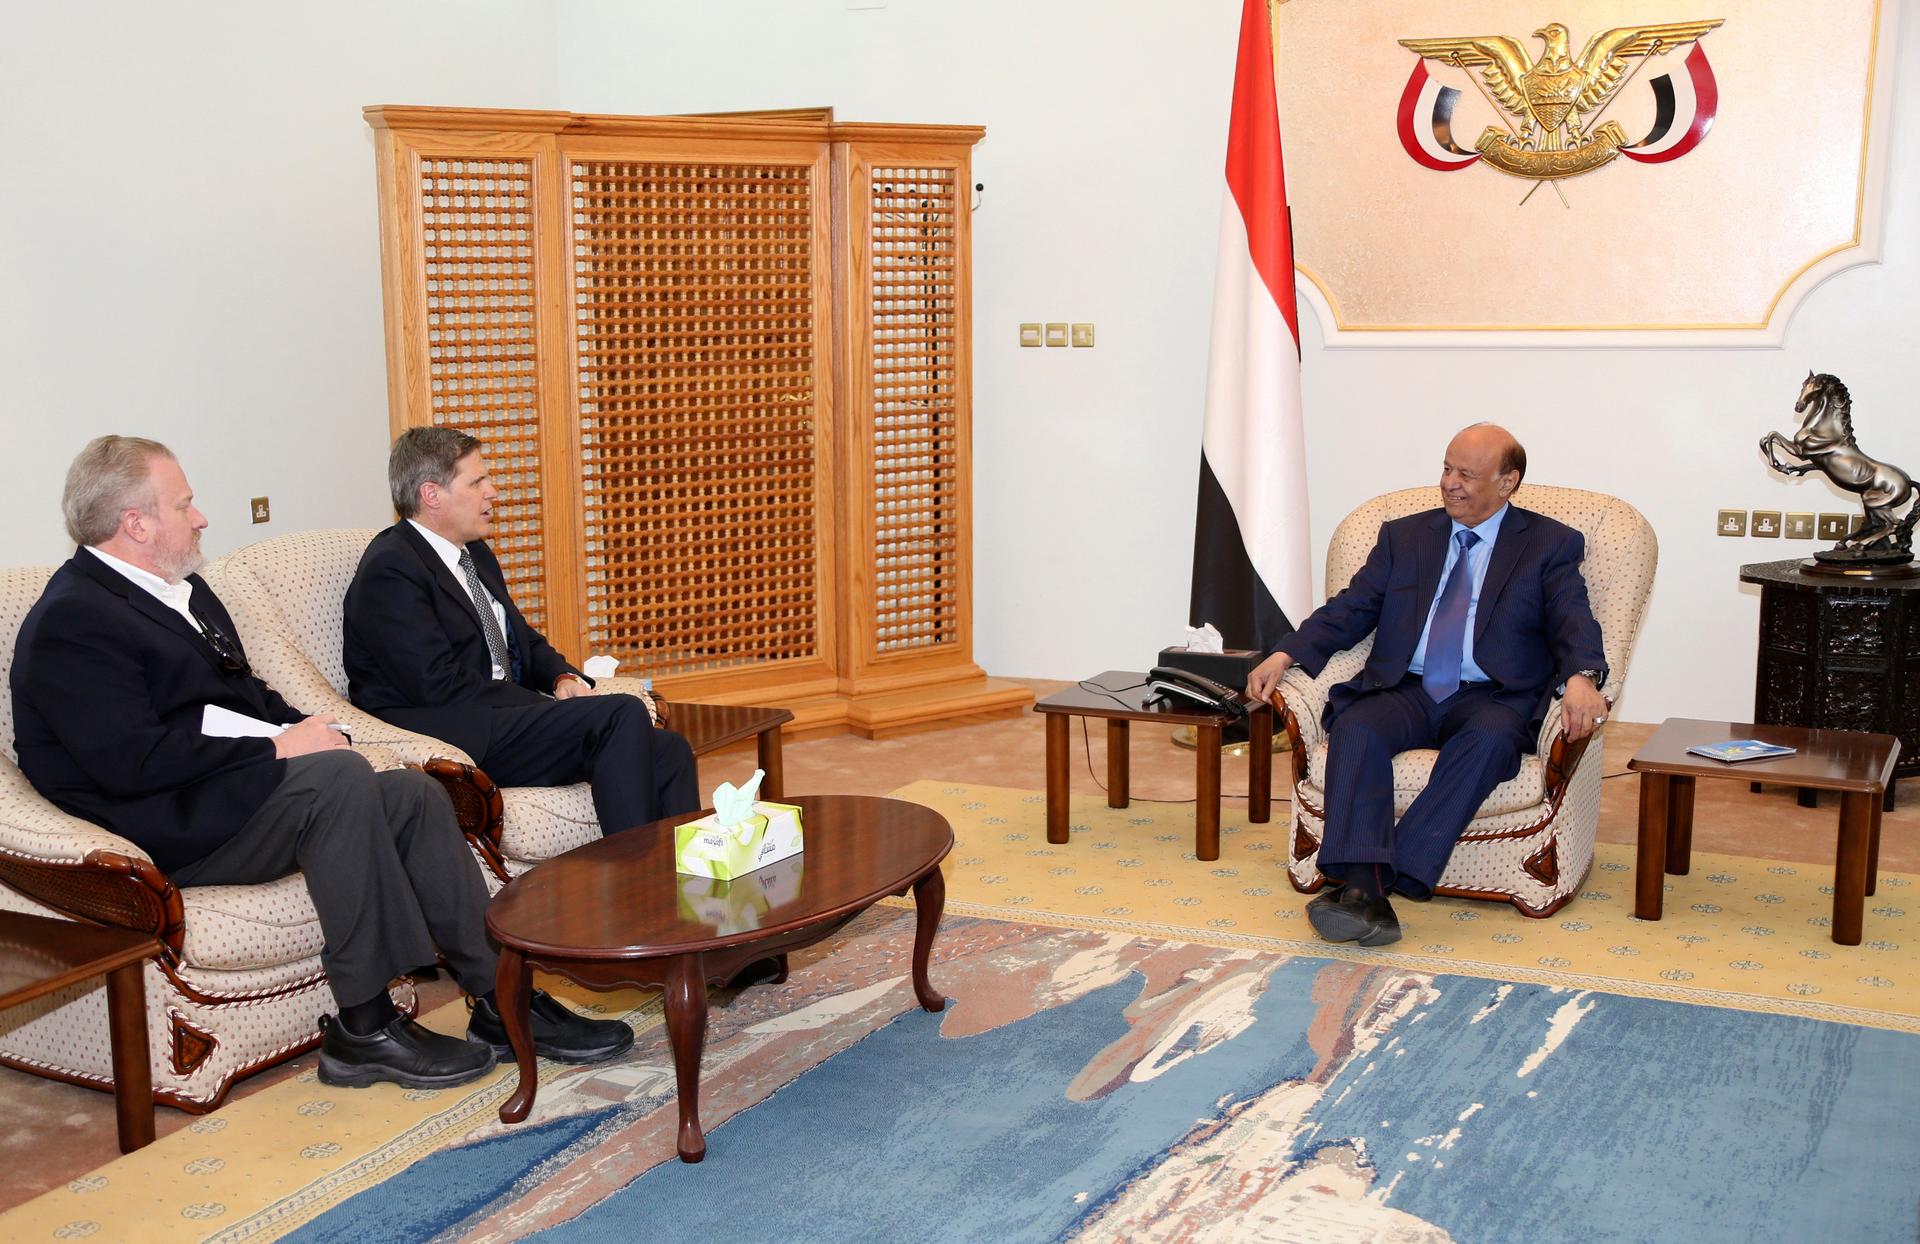 Yemen's President Abd-Rabbu Mansour Hadi (R) talks with U.S. Ambassador to Yemen Matthew H. Tueller (C) during a meeting in the southern port city of Aden March 2, 2015.